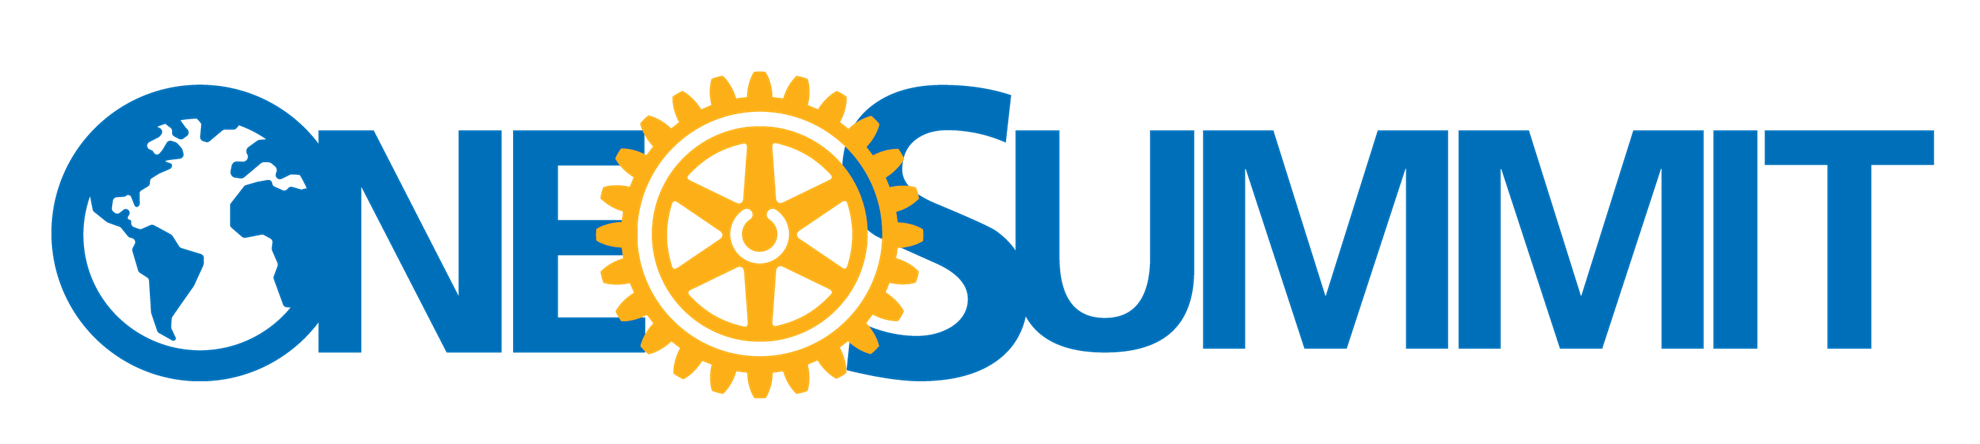 onerotary summit logo